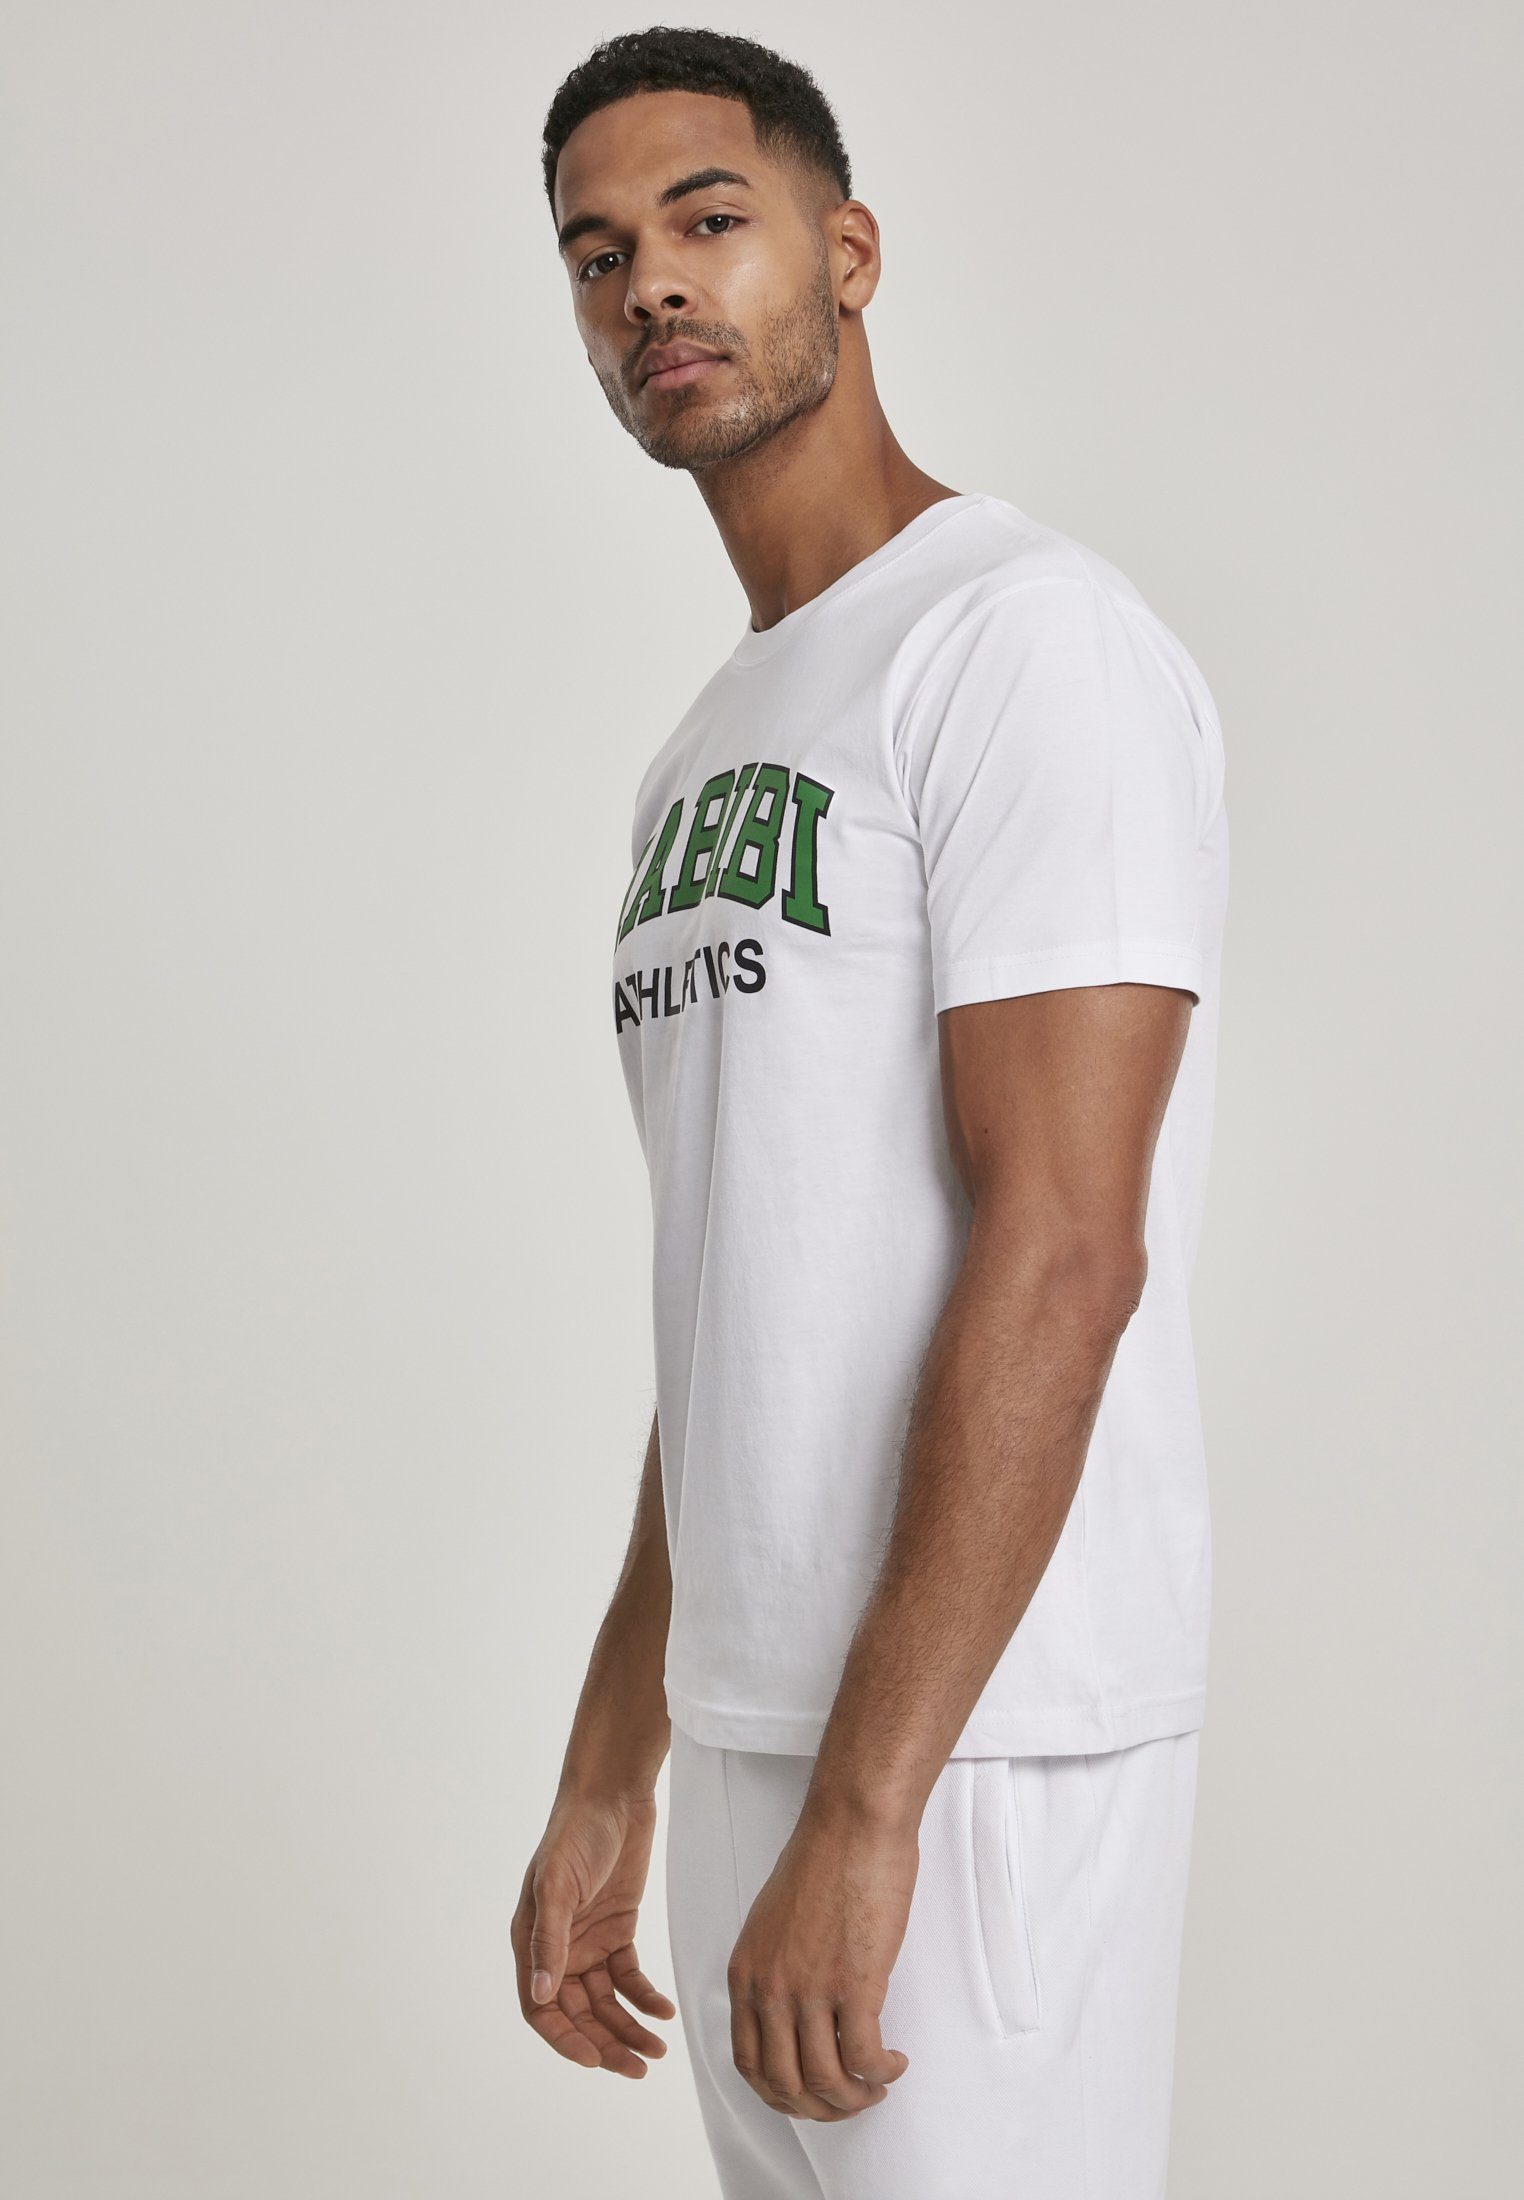 Tee T-Shirt Herren (1-tlg) white Athletics MisterTee Habibi